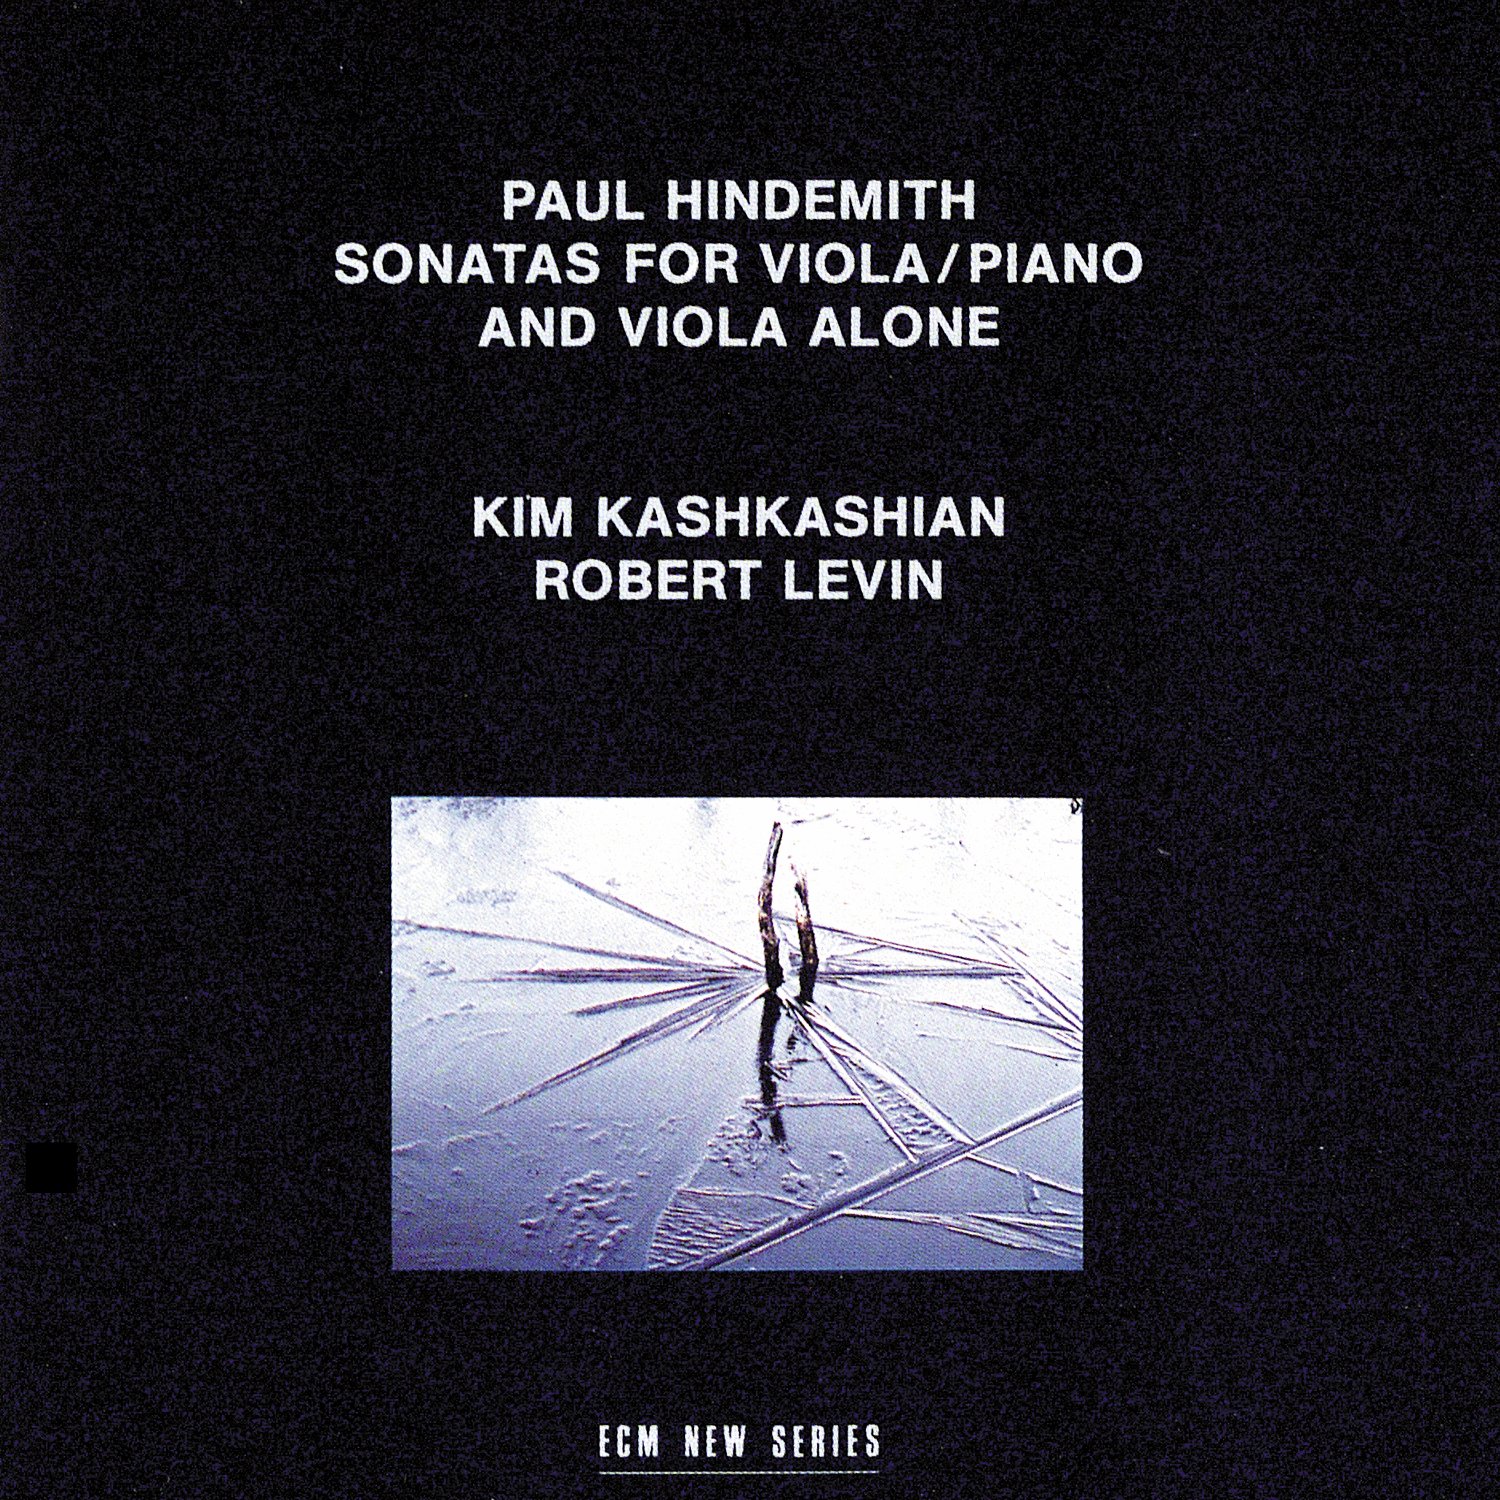 <p>Sonatas for Viola and Piano/Sonatas for Viola Alone – Paul Hindemith</p>
